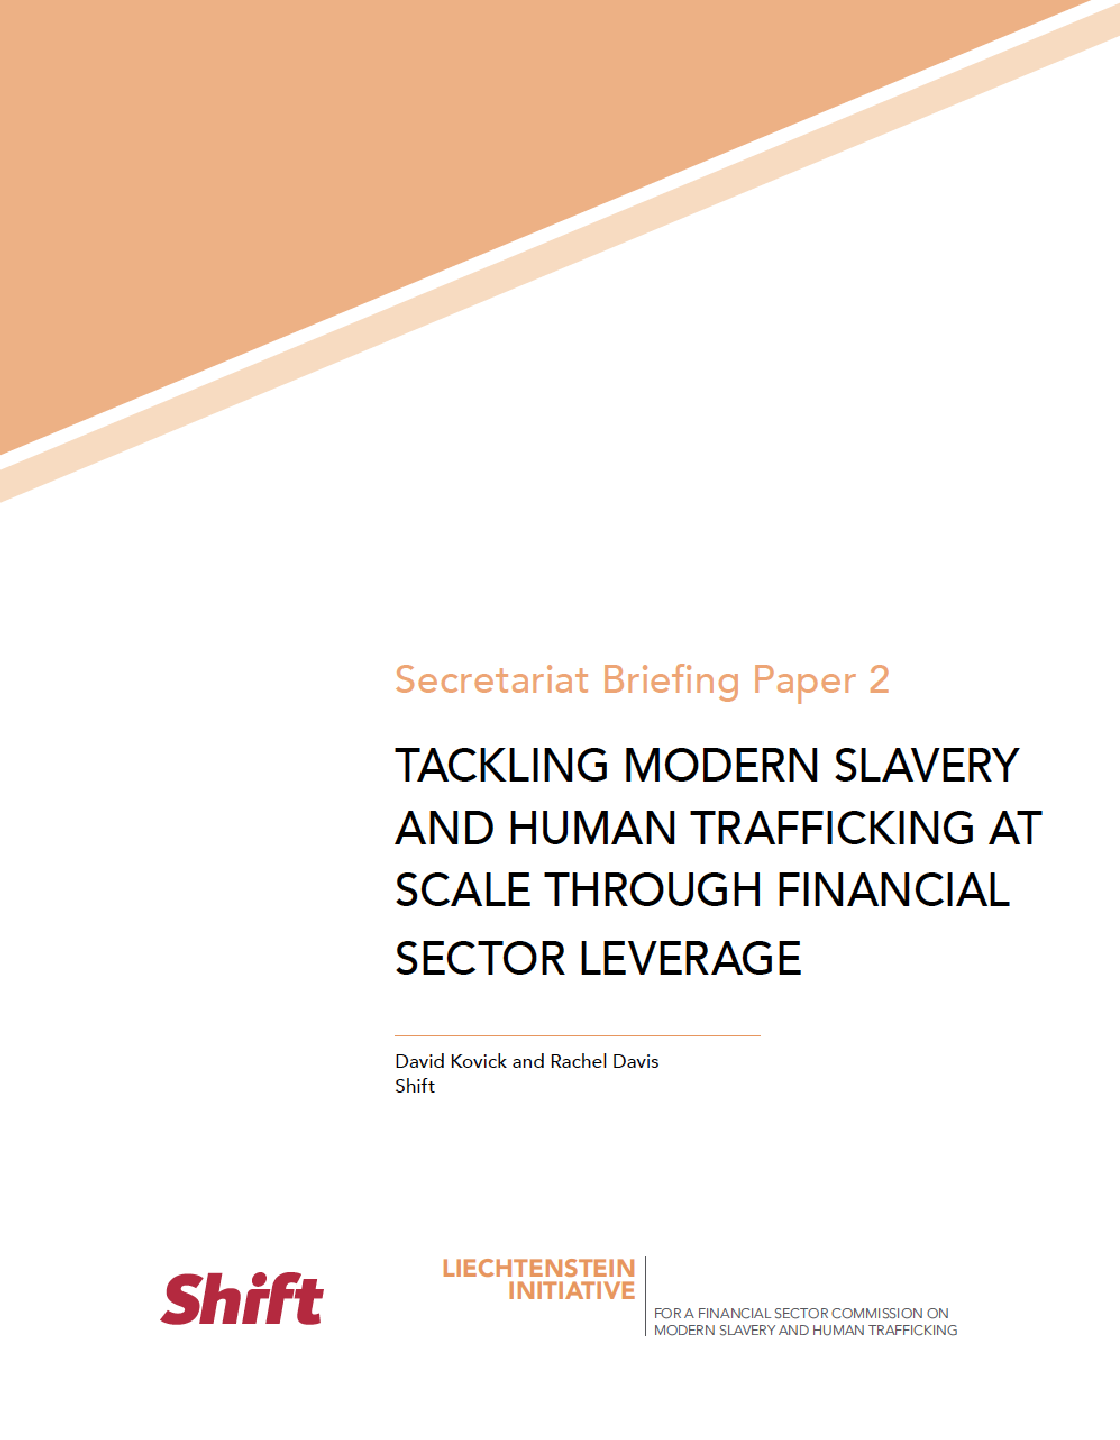 Tackling Modern Slavery through Financial Sector Leverage